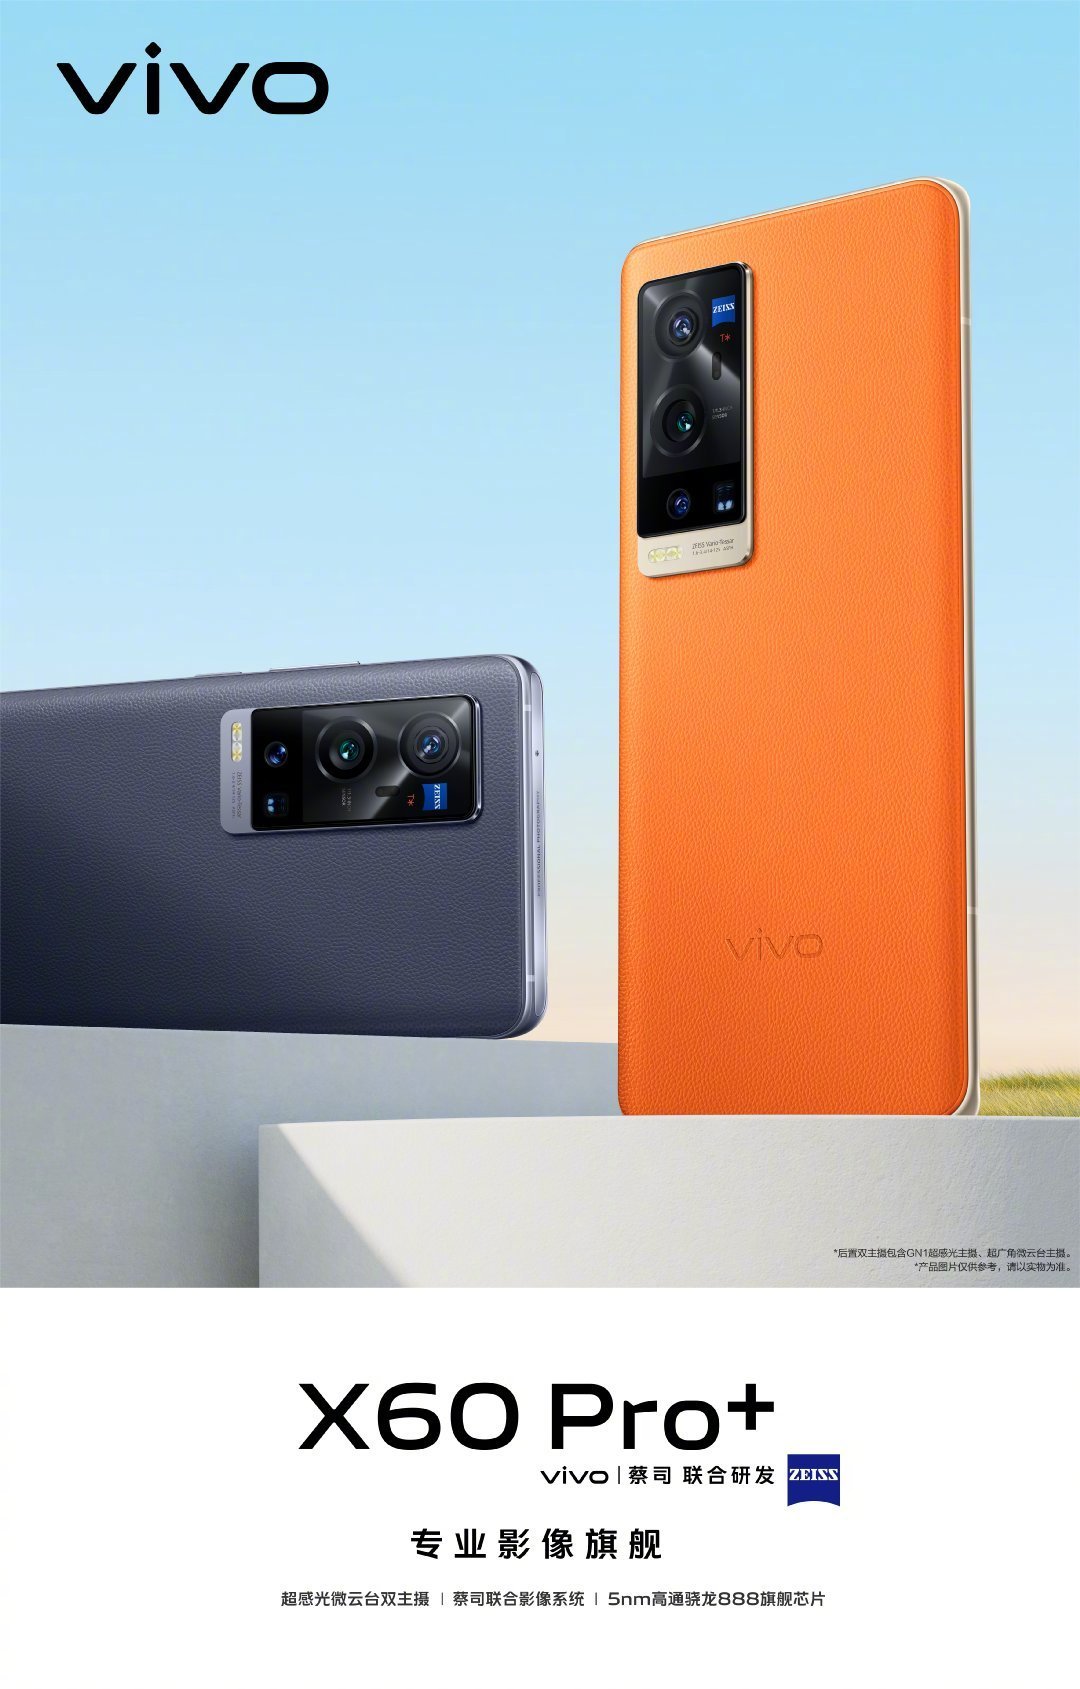 Vivo X60 Pro+ 5G to sport dual main cameras and Snapdragon 888, pre